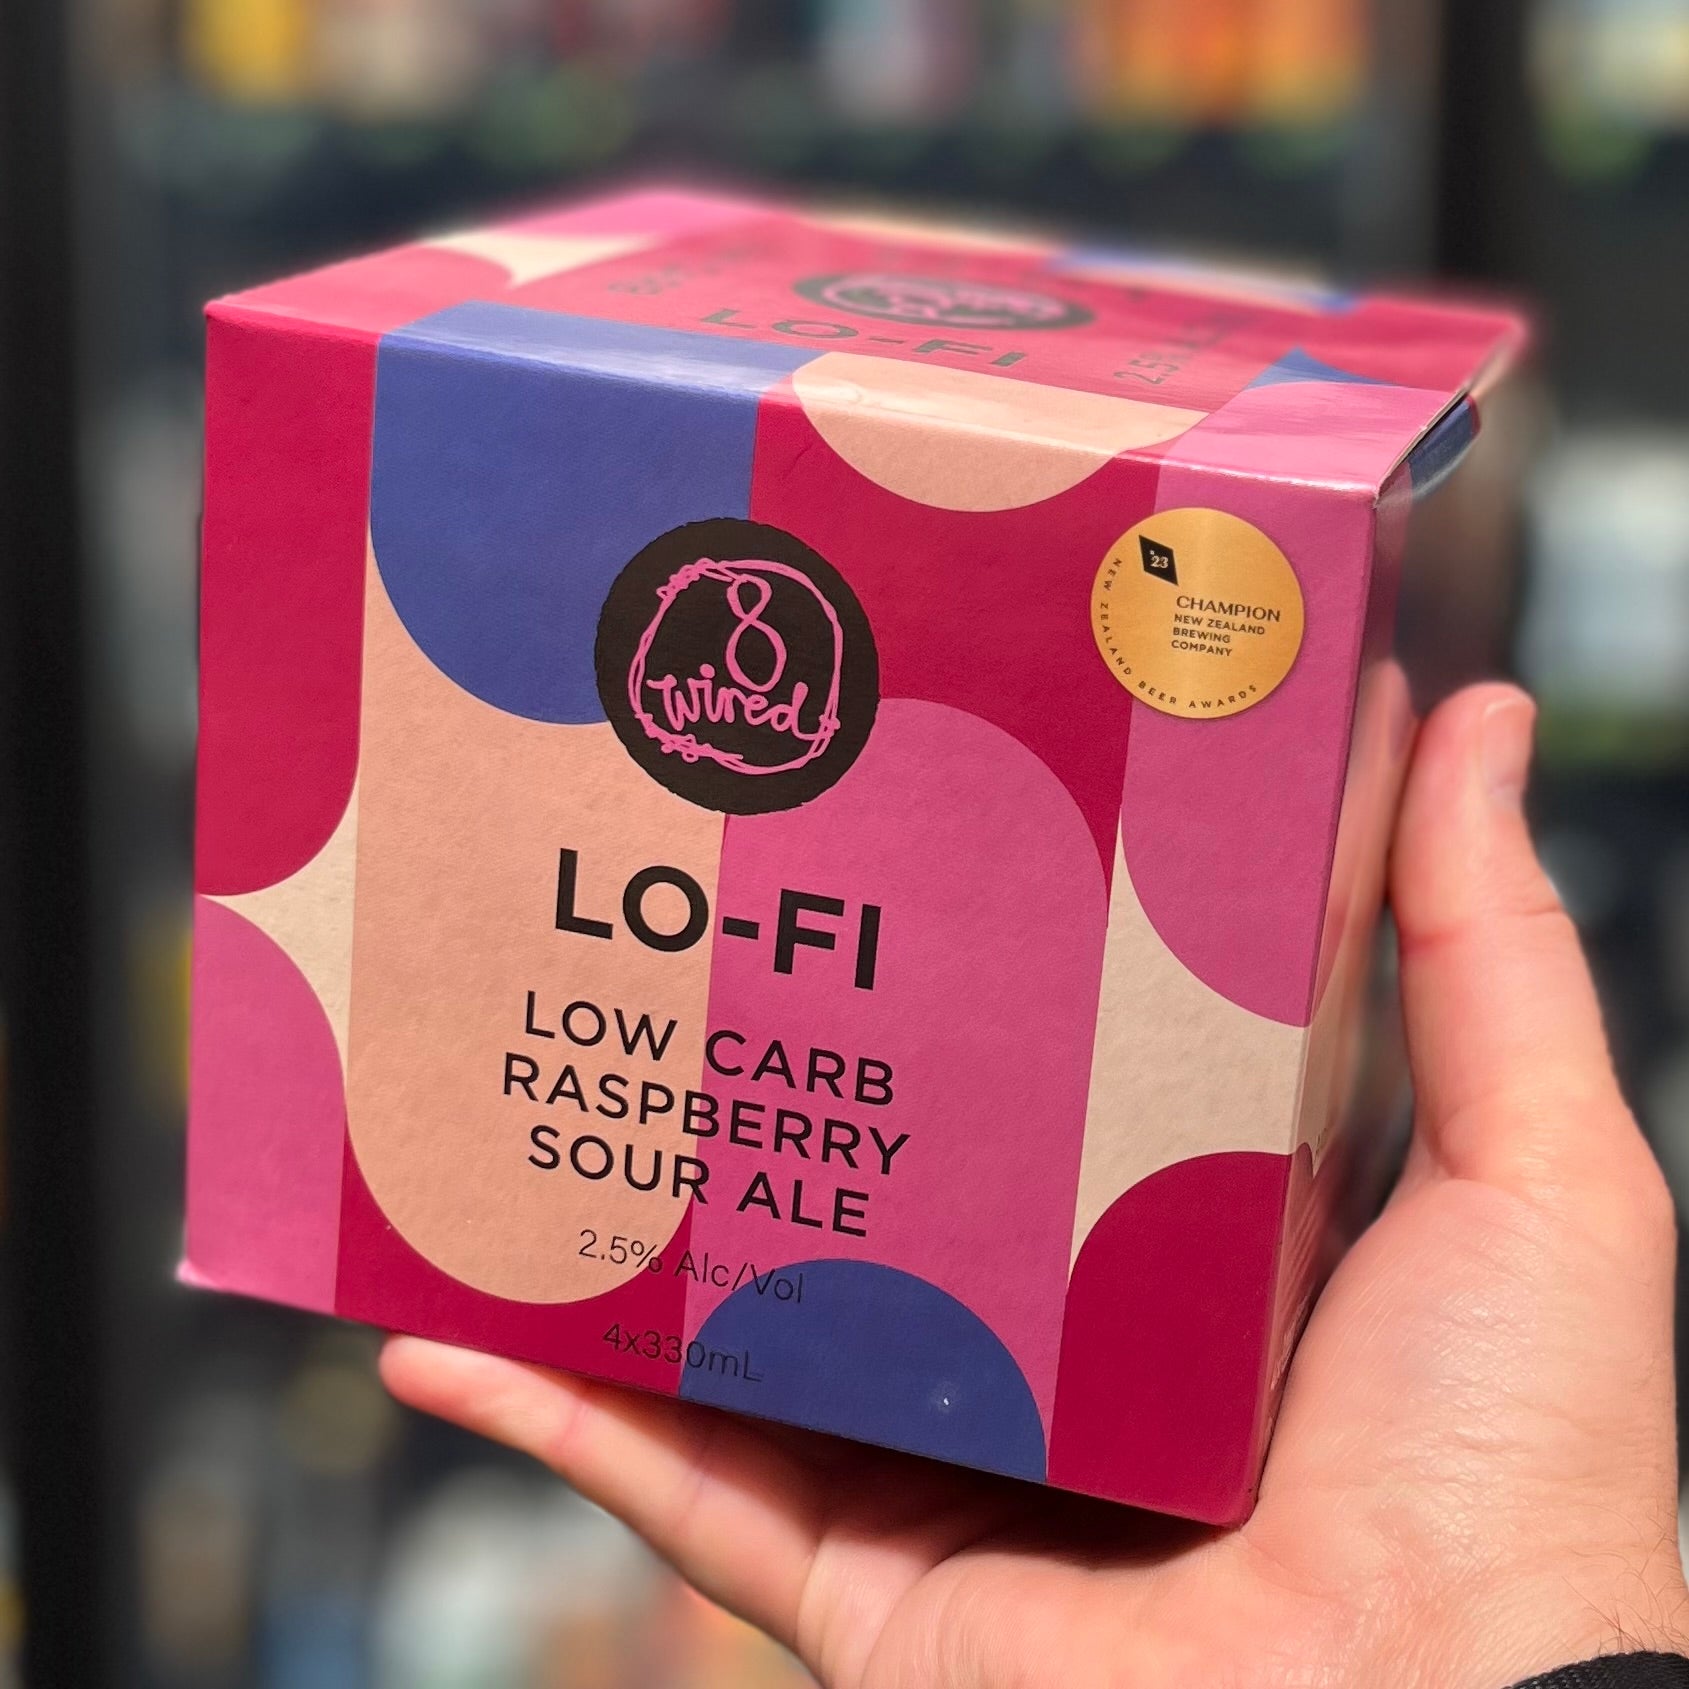 Lo-Fi Low Carb Raspberry Sour